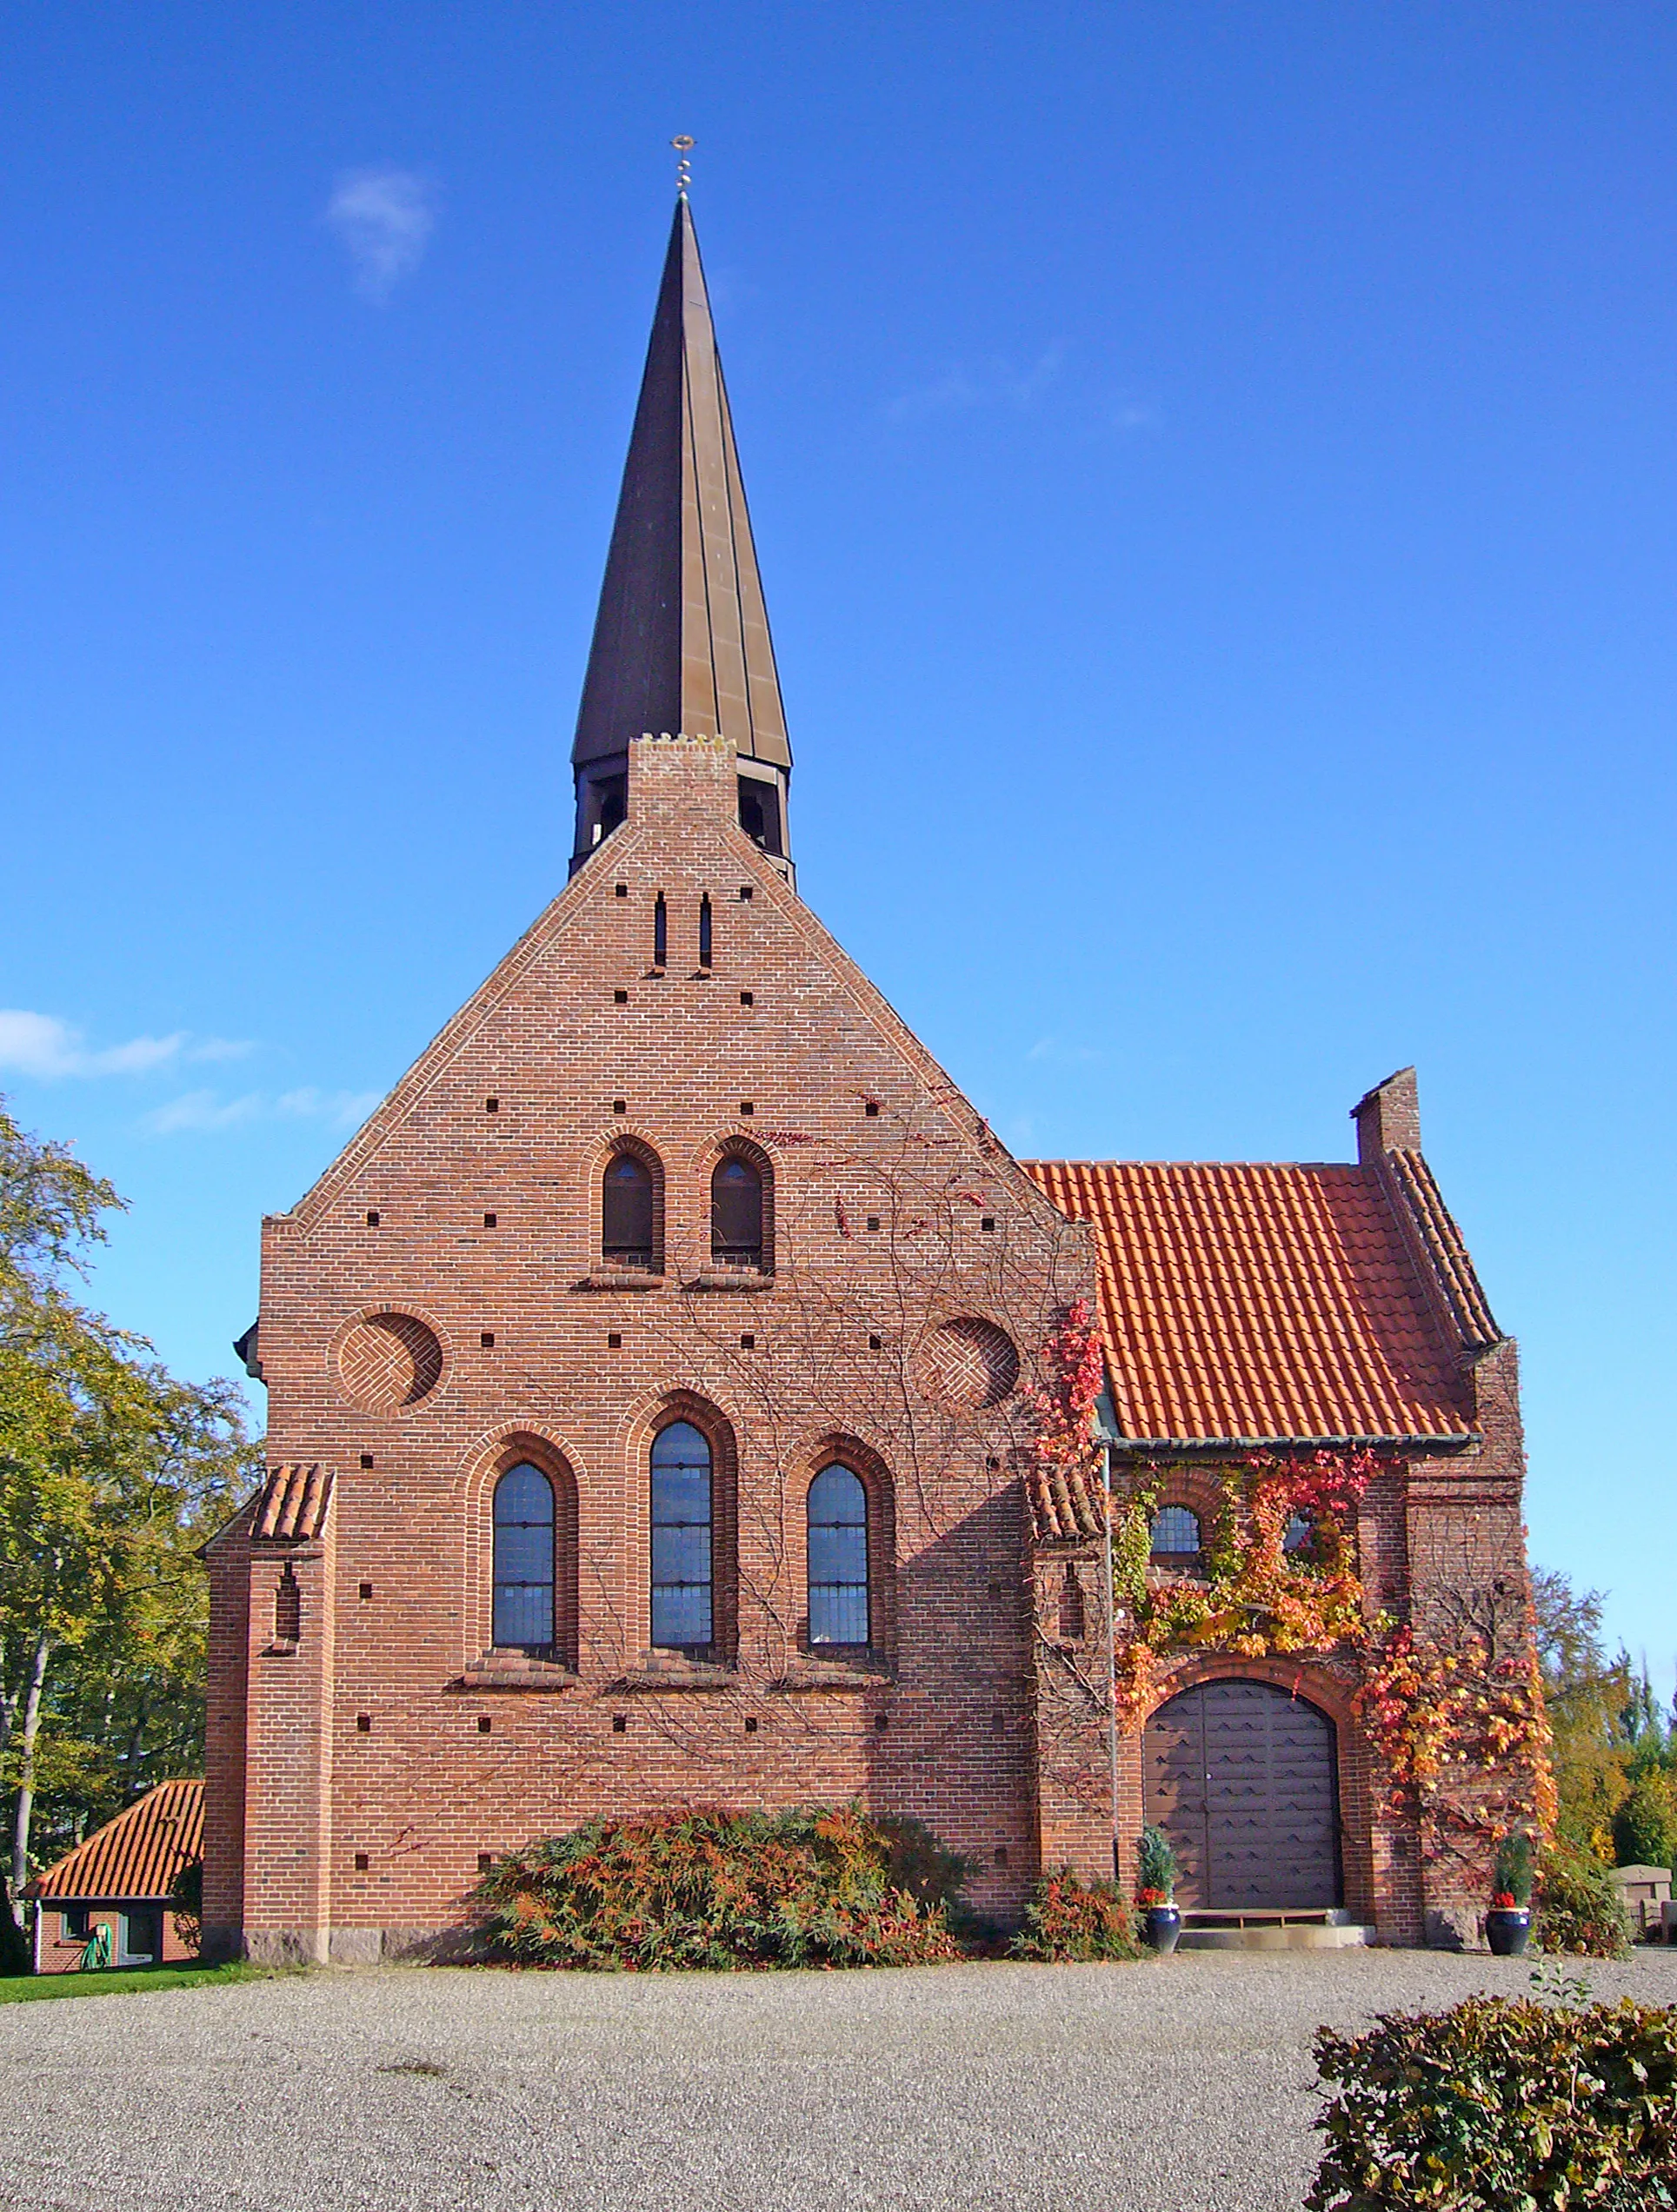 Photo showing: Vor Frue Kirke in Vor Frue, Roskilde, Denmark

Exterior